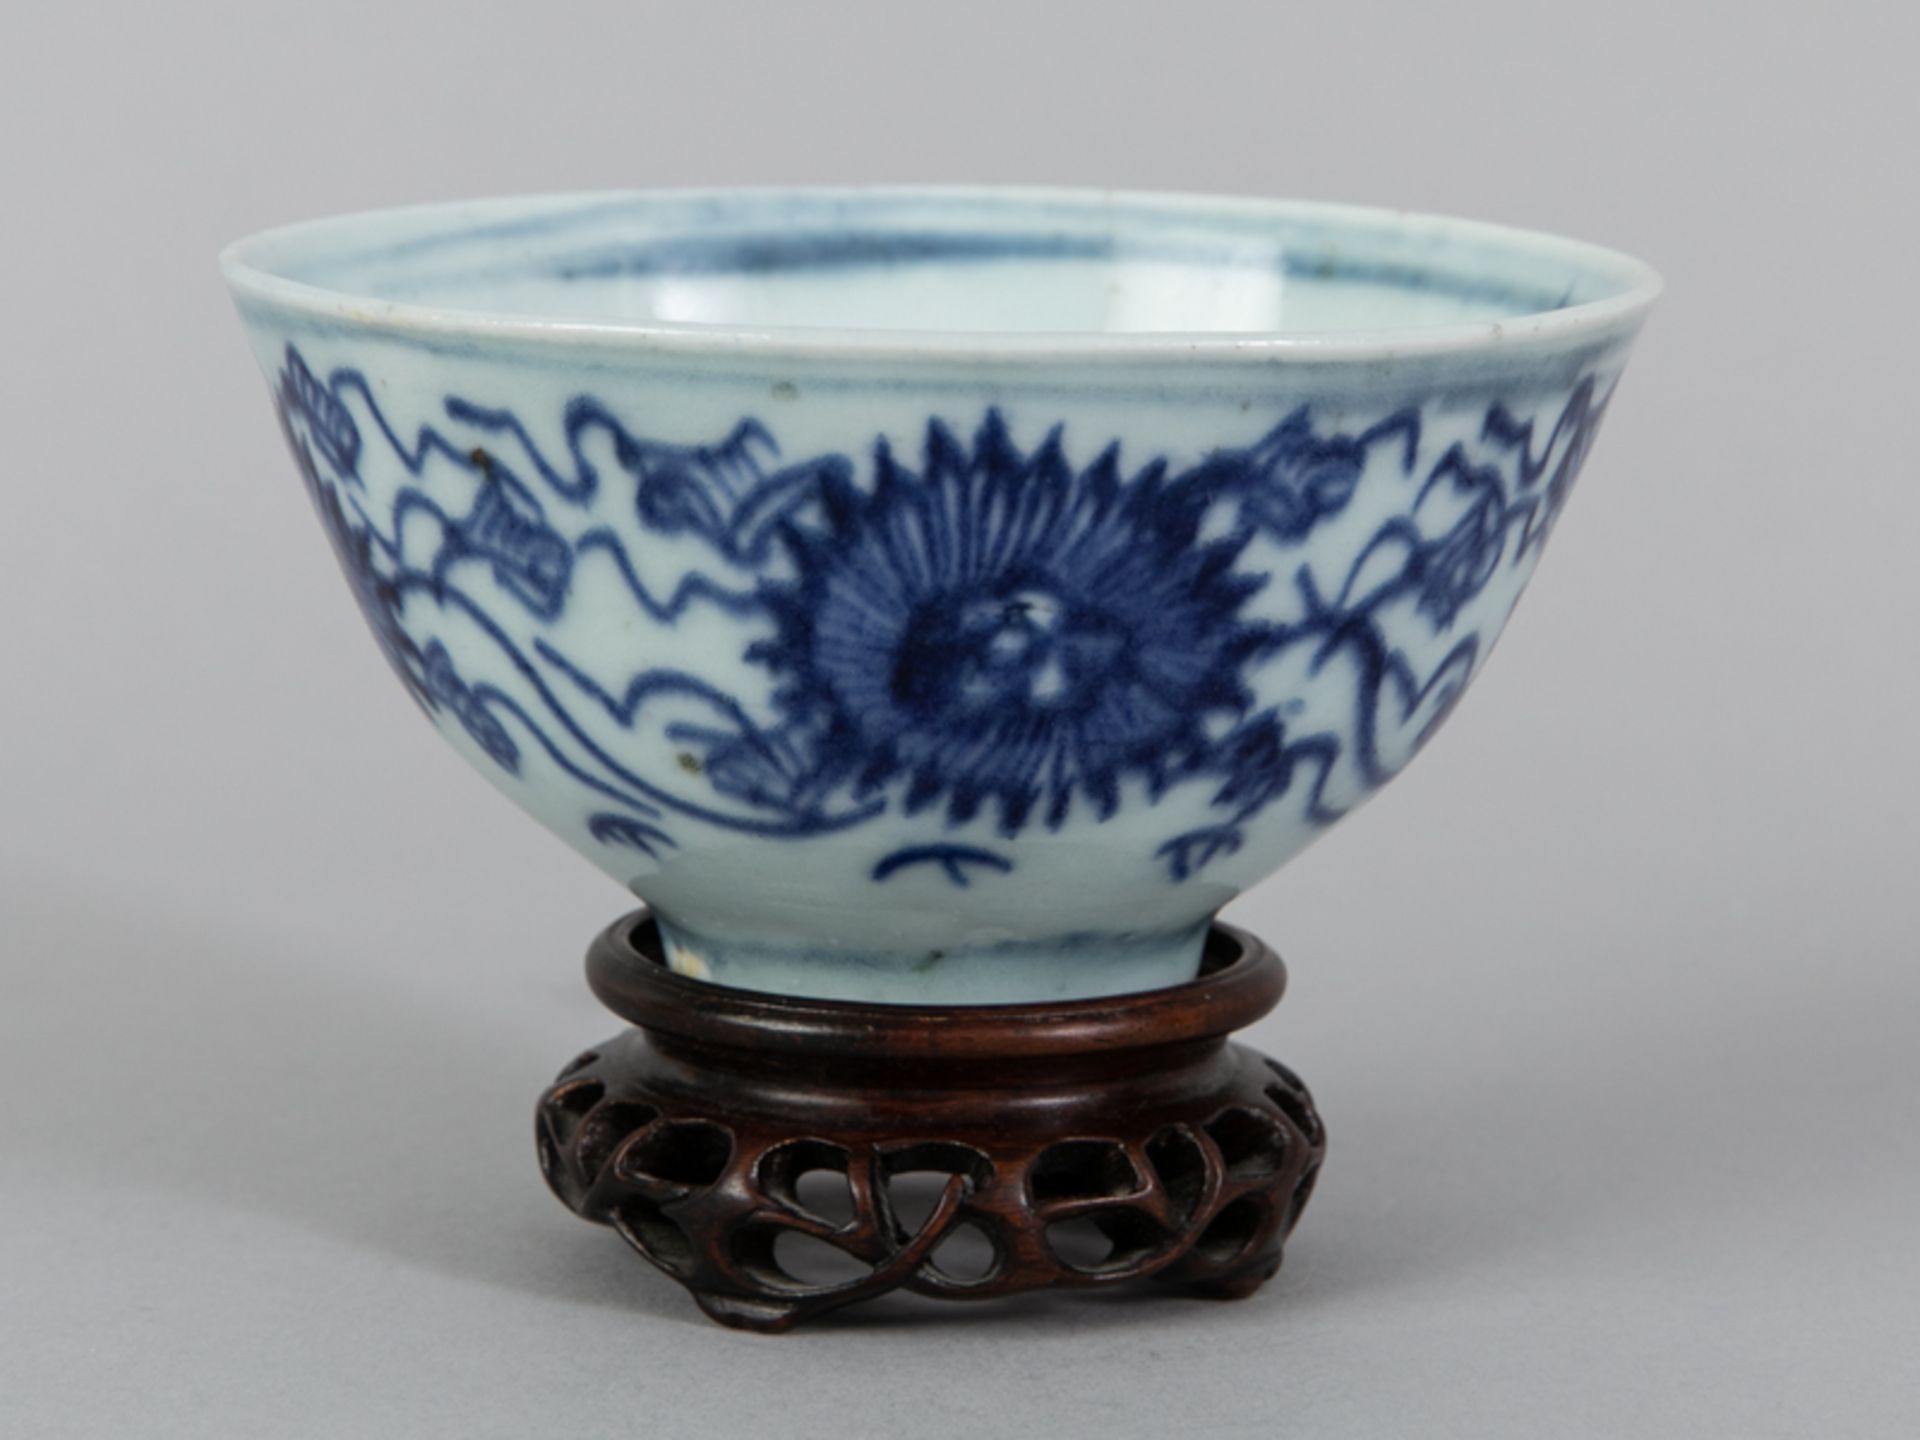 Kleine Schale / Kumme / Teeschale, China, wohl Qing-Dynastie, 18. Jh. - Image 2 of 6